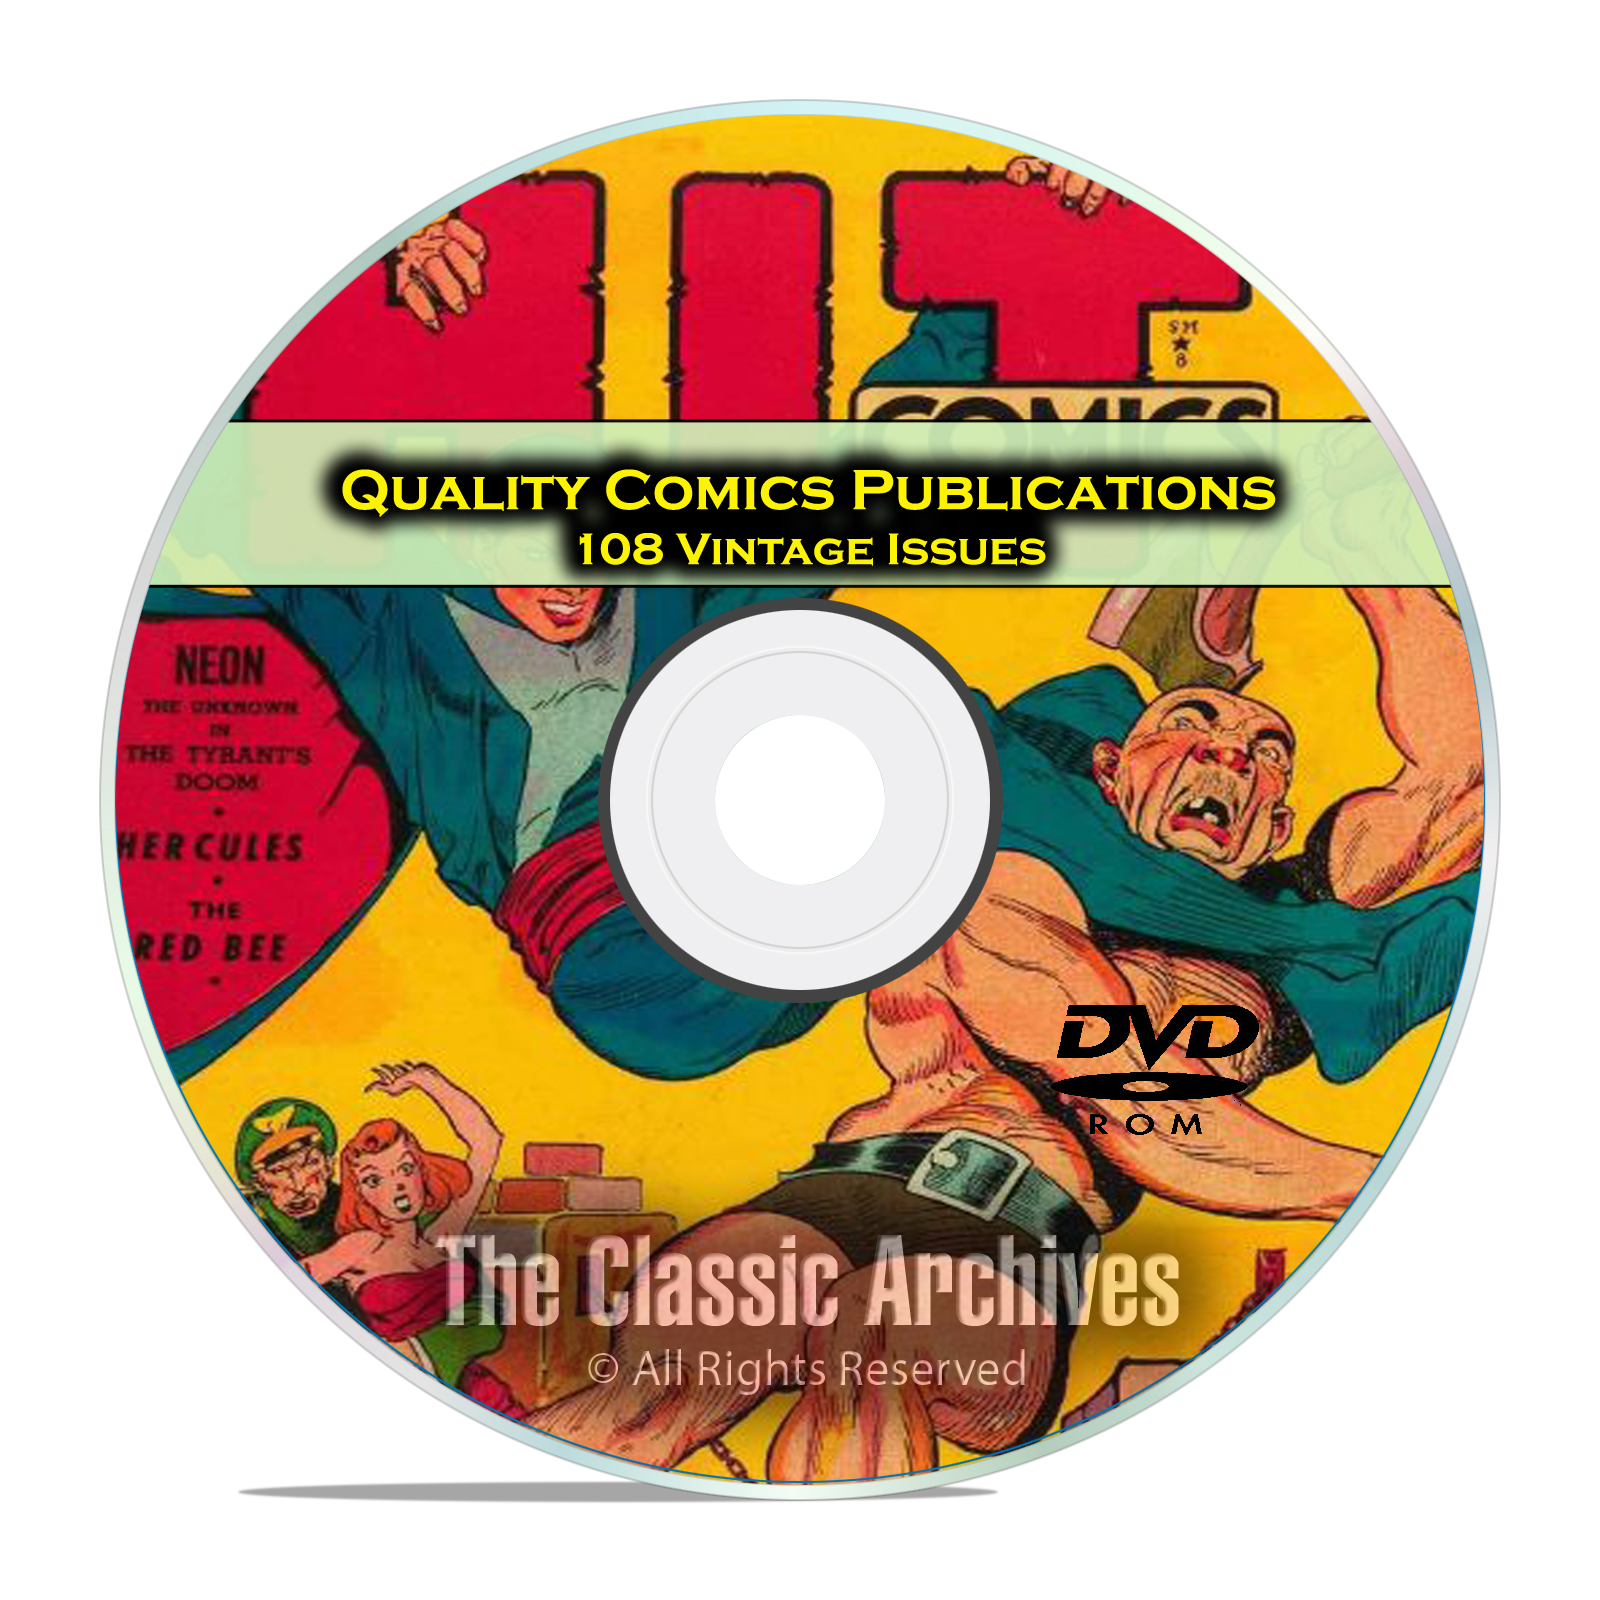 Quality Comics, Hit Comics Military Comics 108 Issues Golden Age Comics DVD